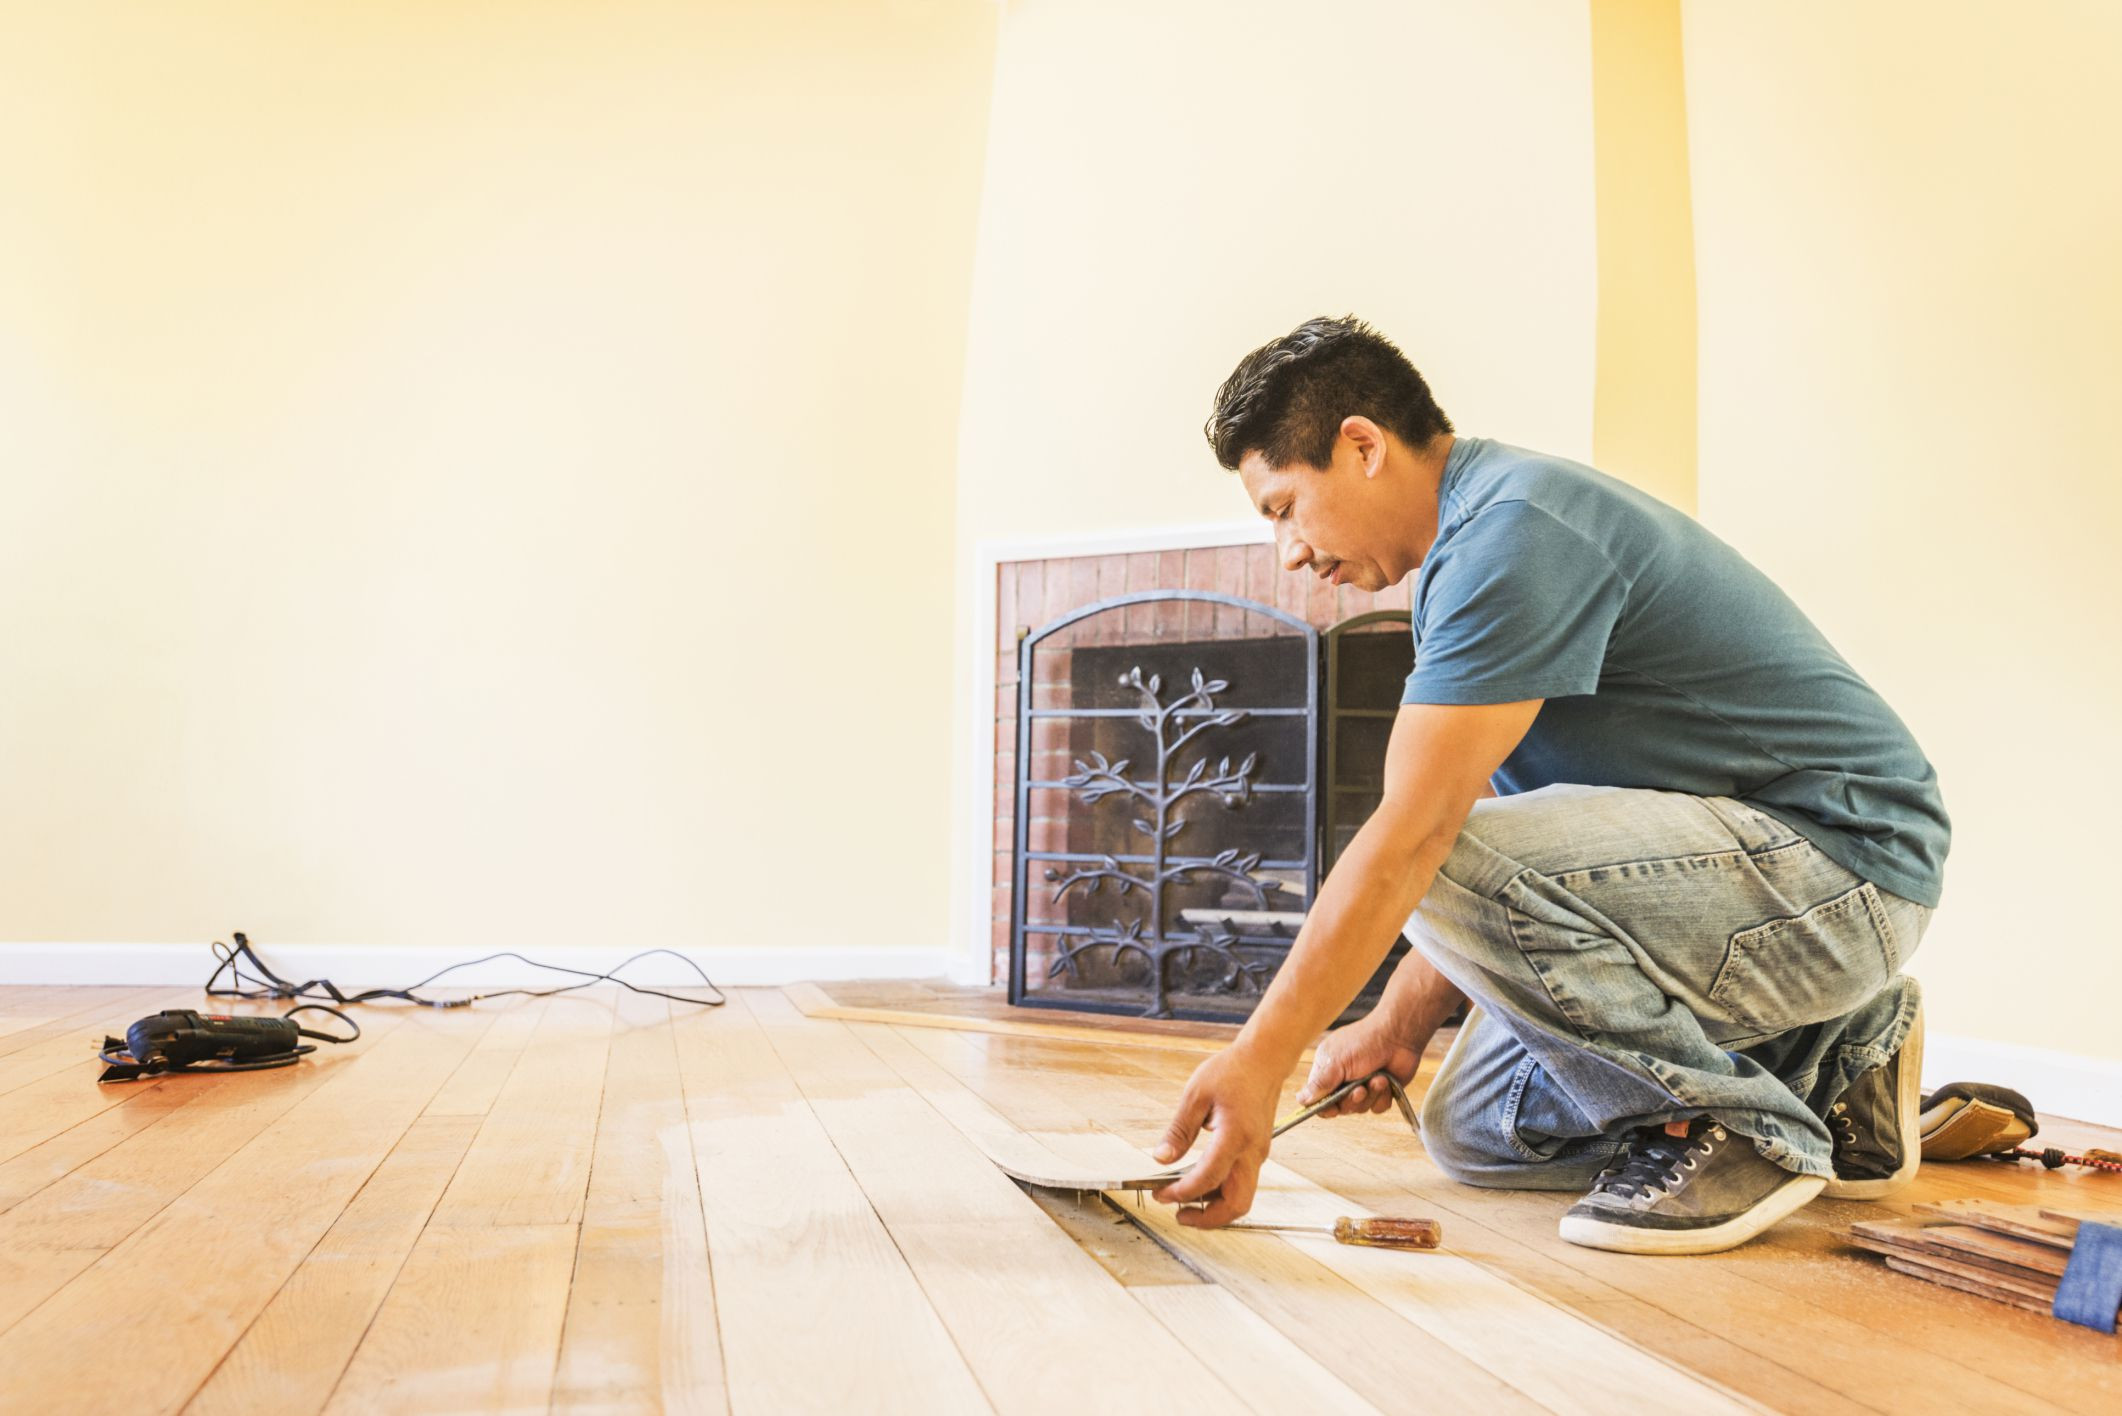 hardwood floor refinishing brick nj of sears home improvement basics and review inside installwoodflooring 592016327 56684d6f3df78ce1610a598a